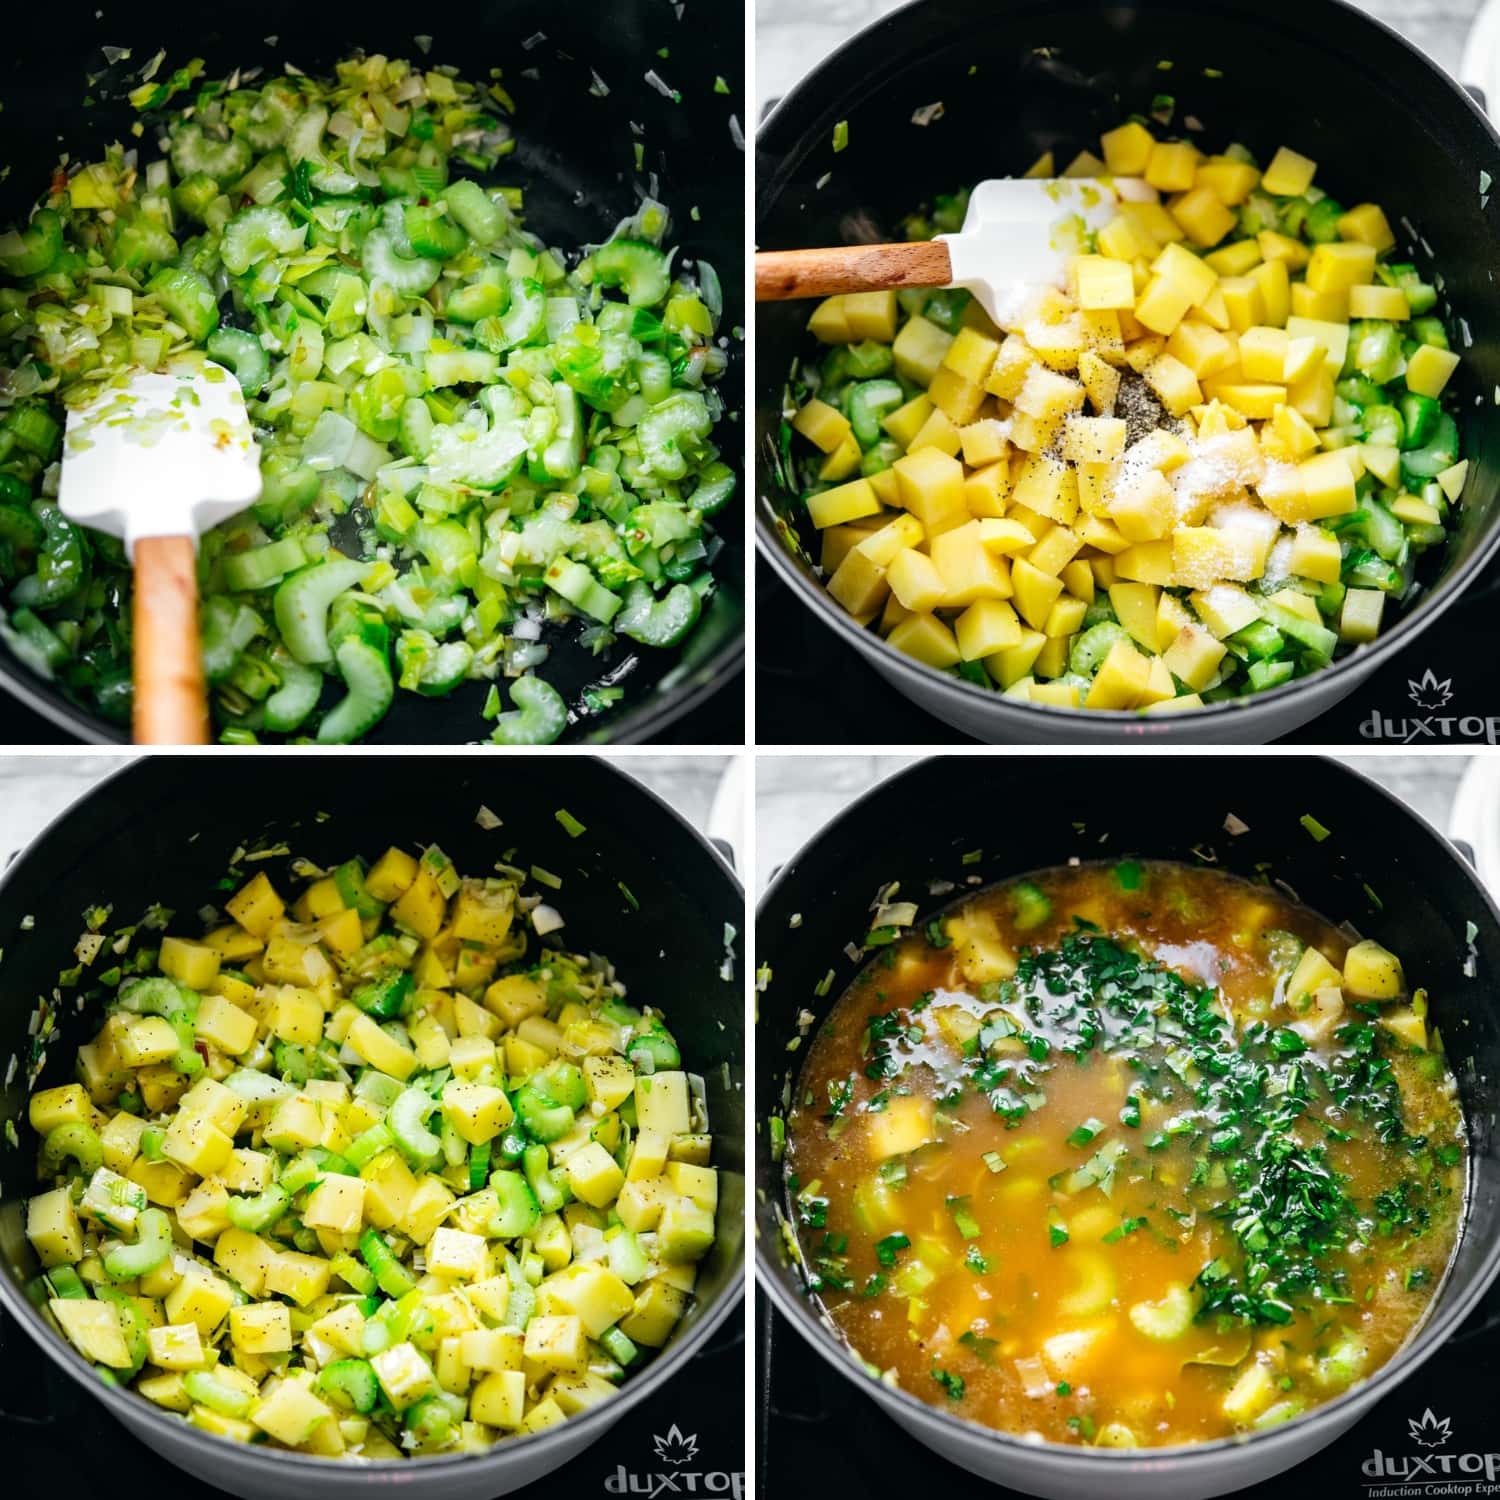 steps of making potato kale soup in large white pot. 